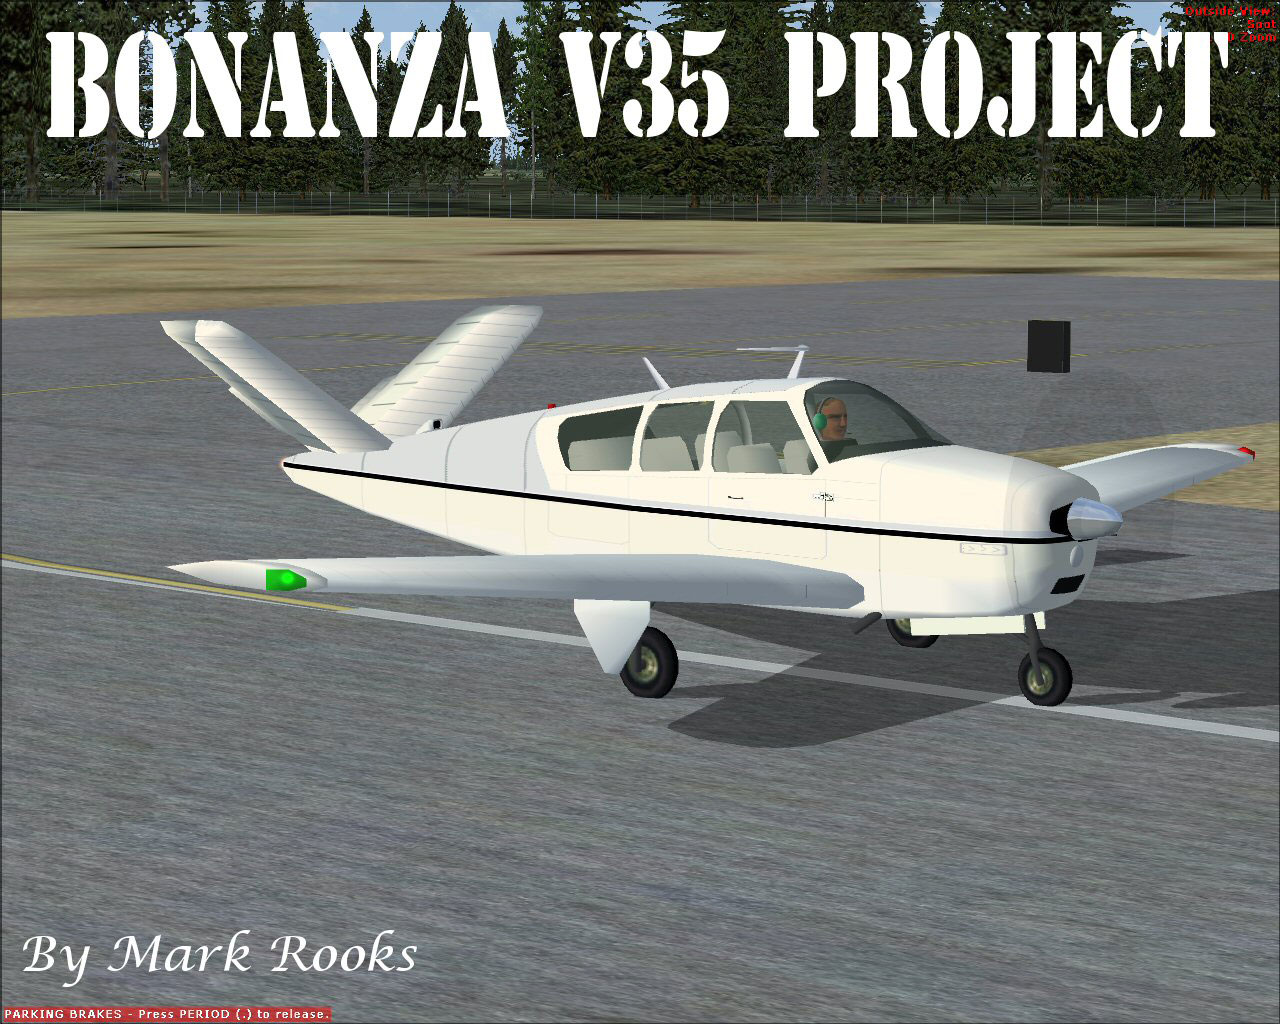 Bonanza Airplane